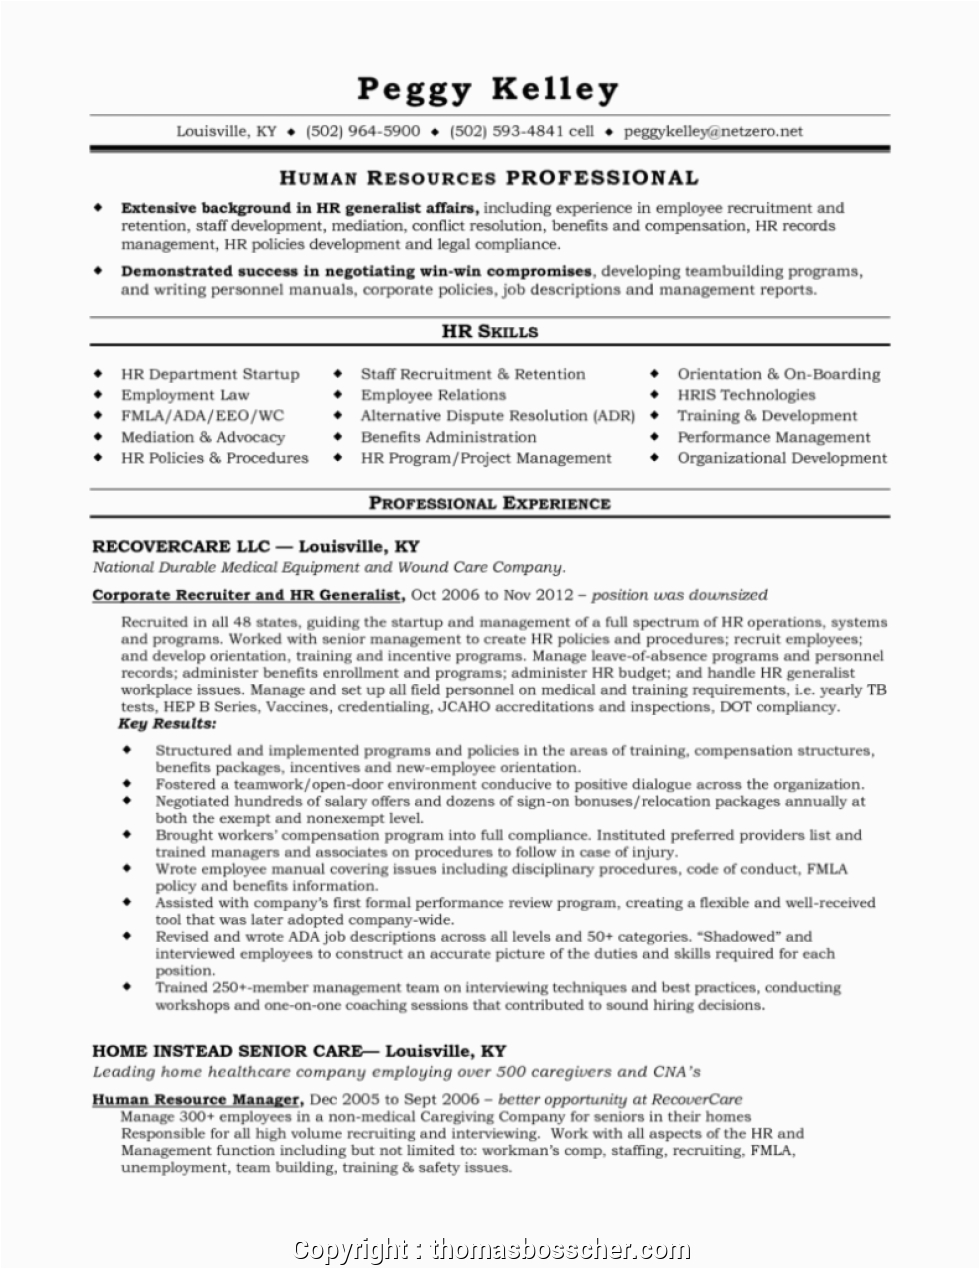 Sample Resume for Experienced Hr Recruiter Professional Hr Recruiter Resume format Download Hr